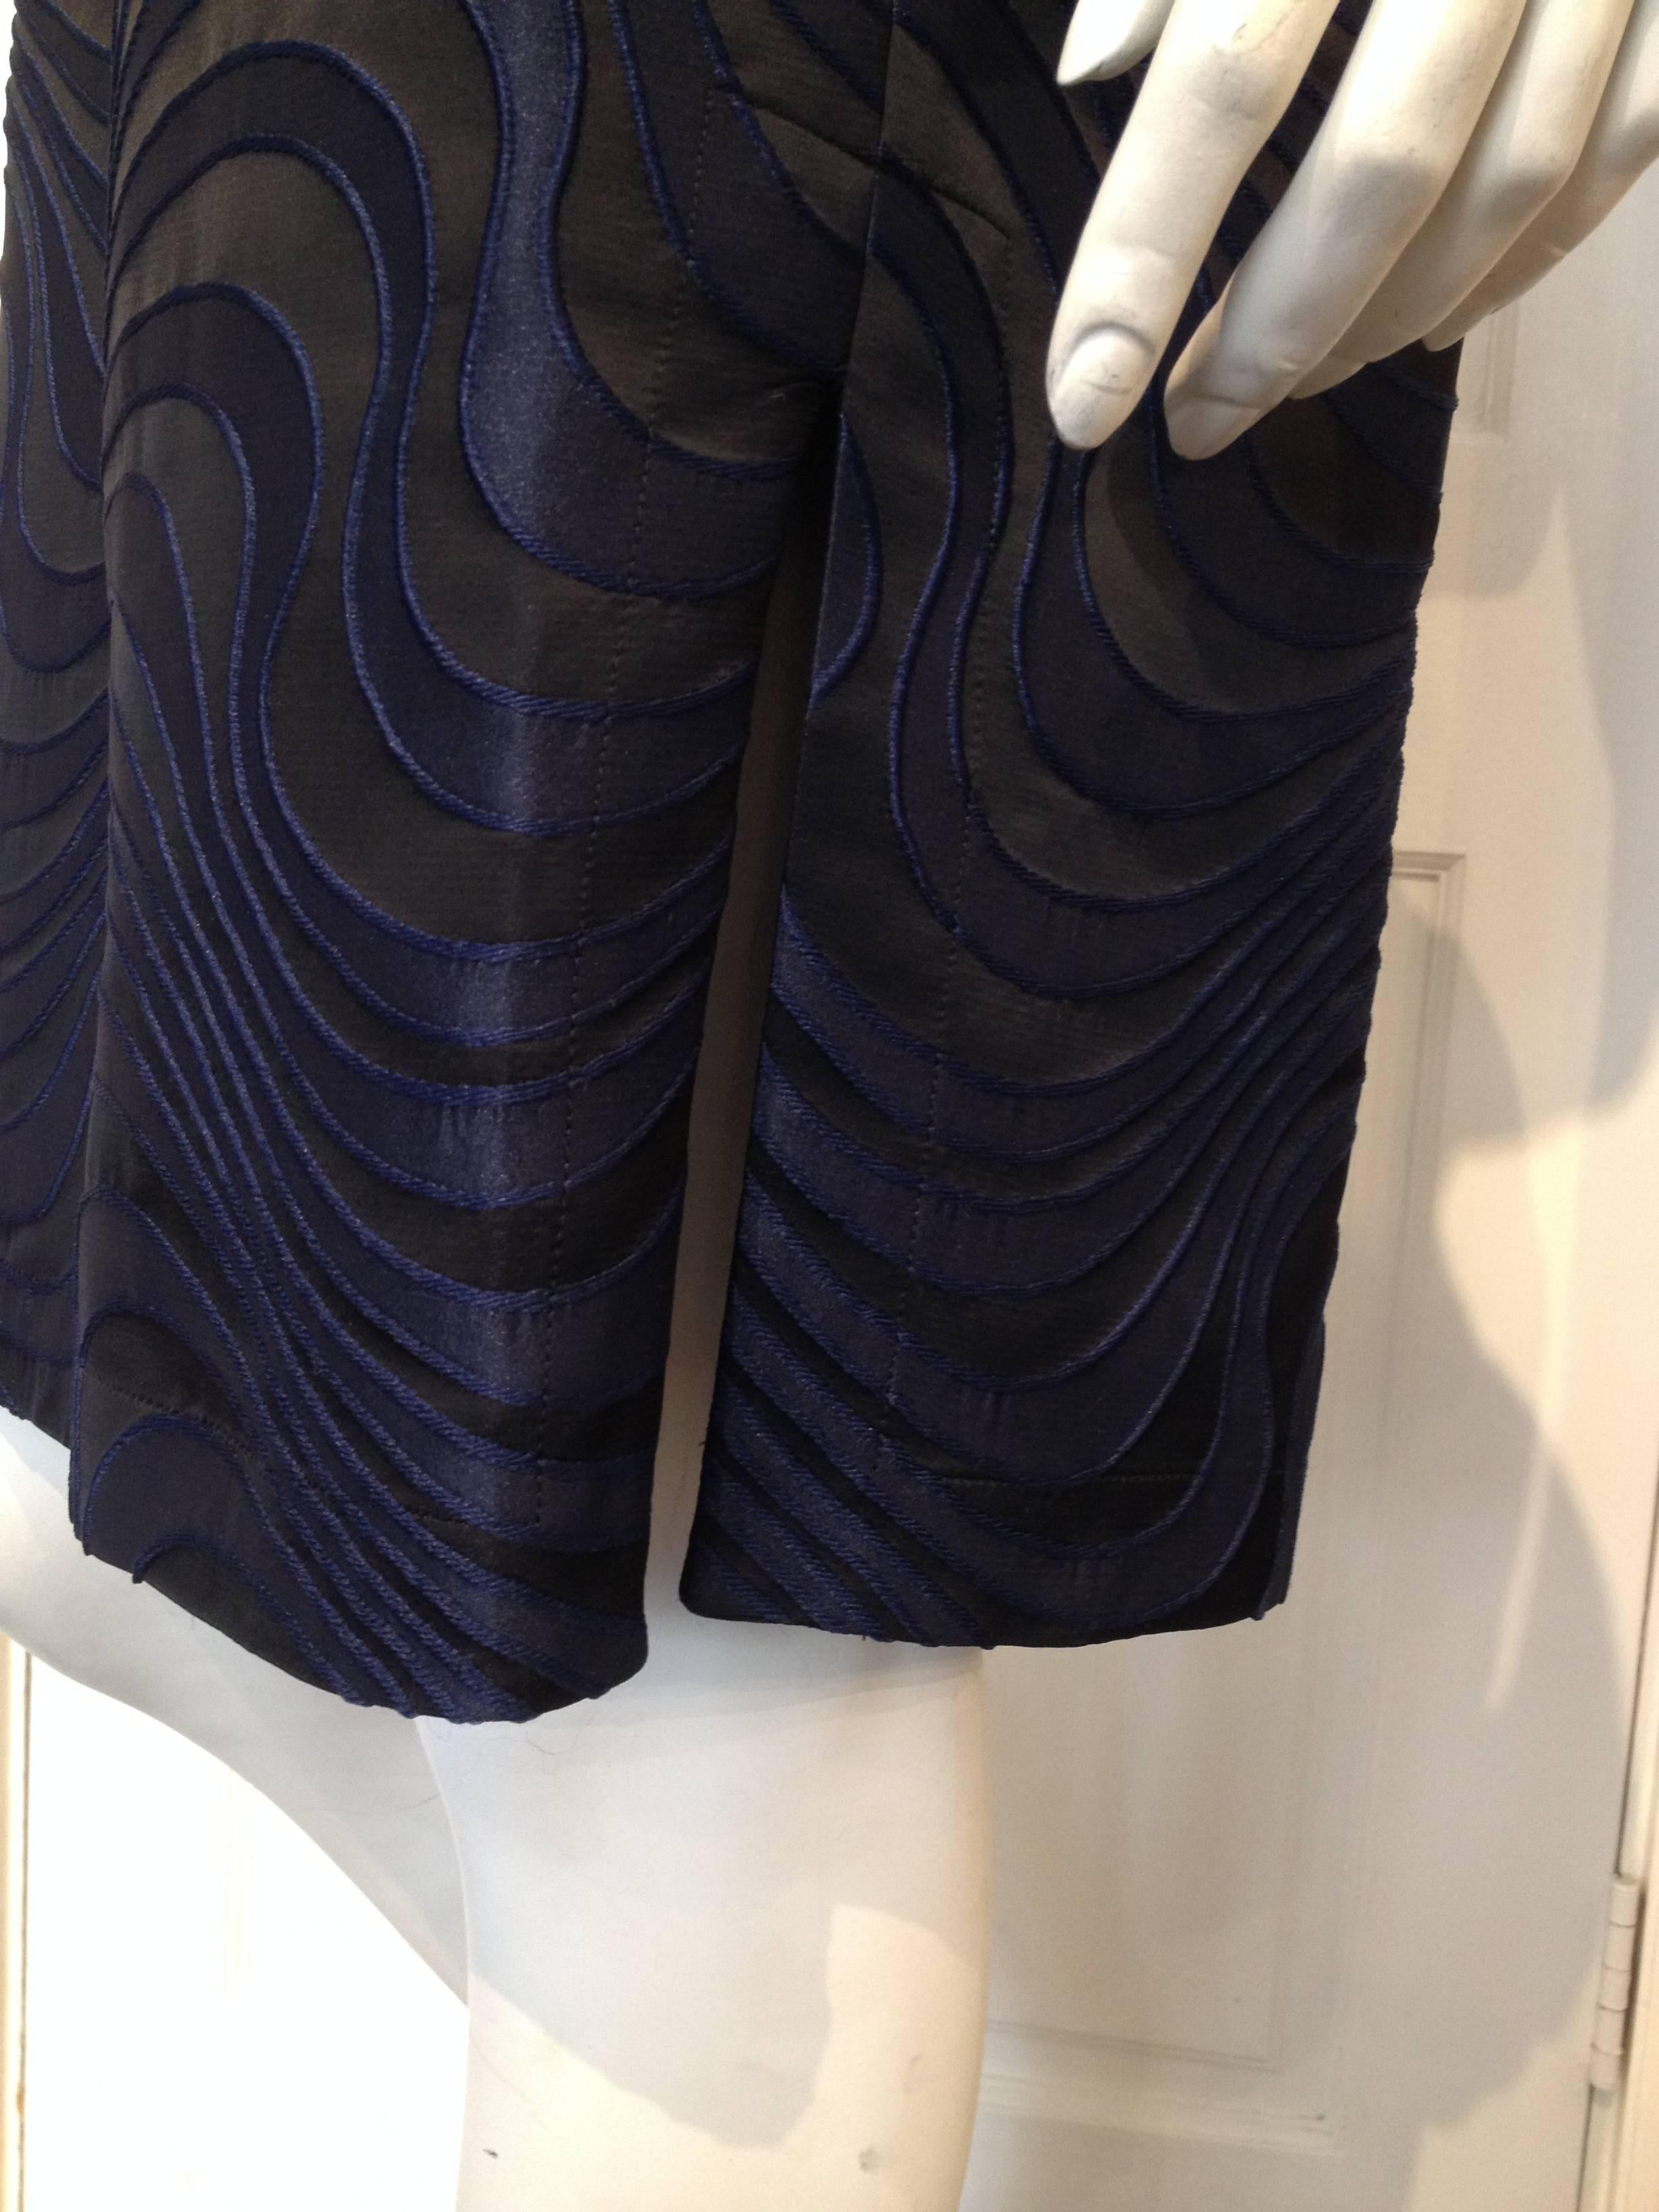 Vionnet Navy and Black Swirled Dress Size 44 (8) 5